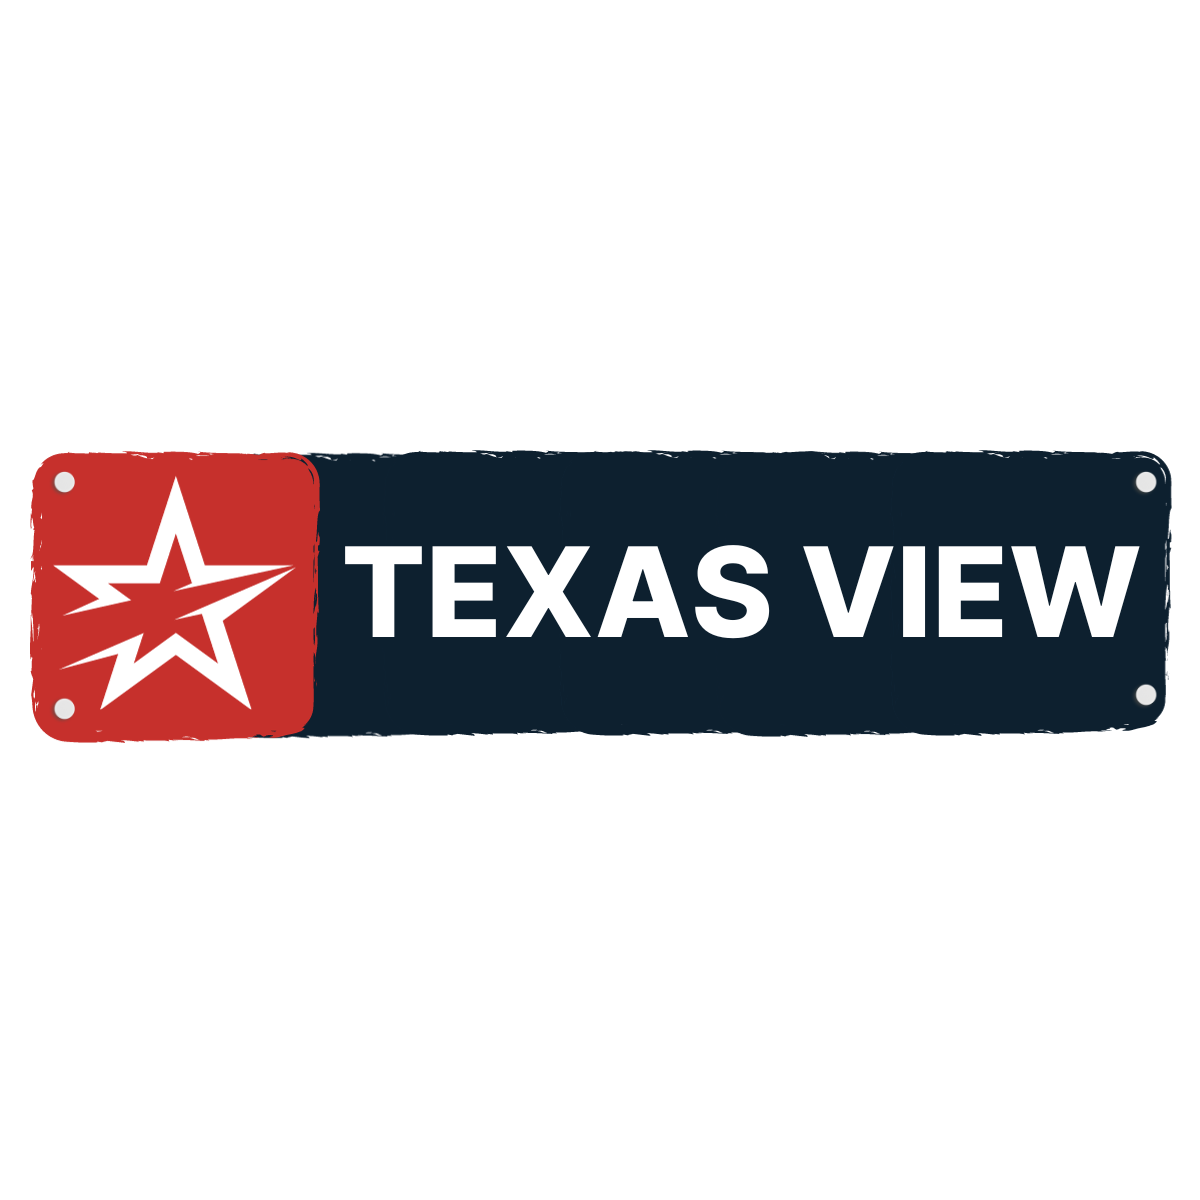 (c) Texasview.org